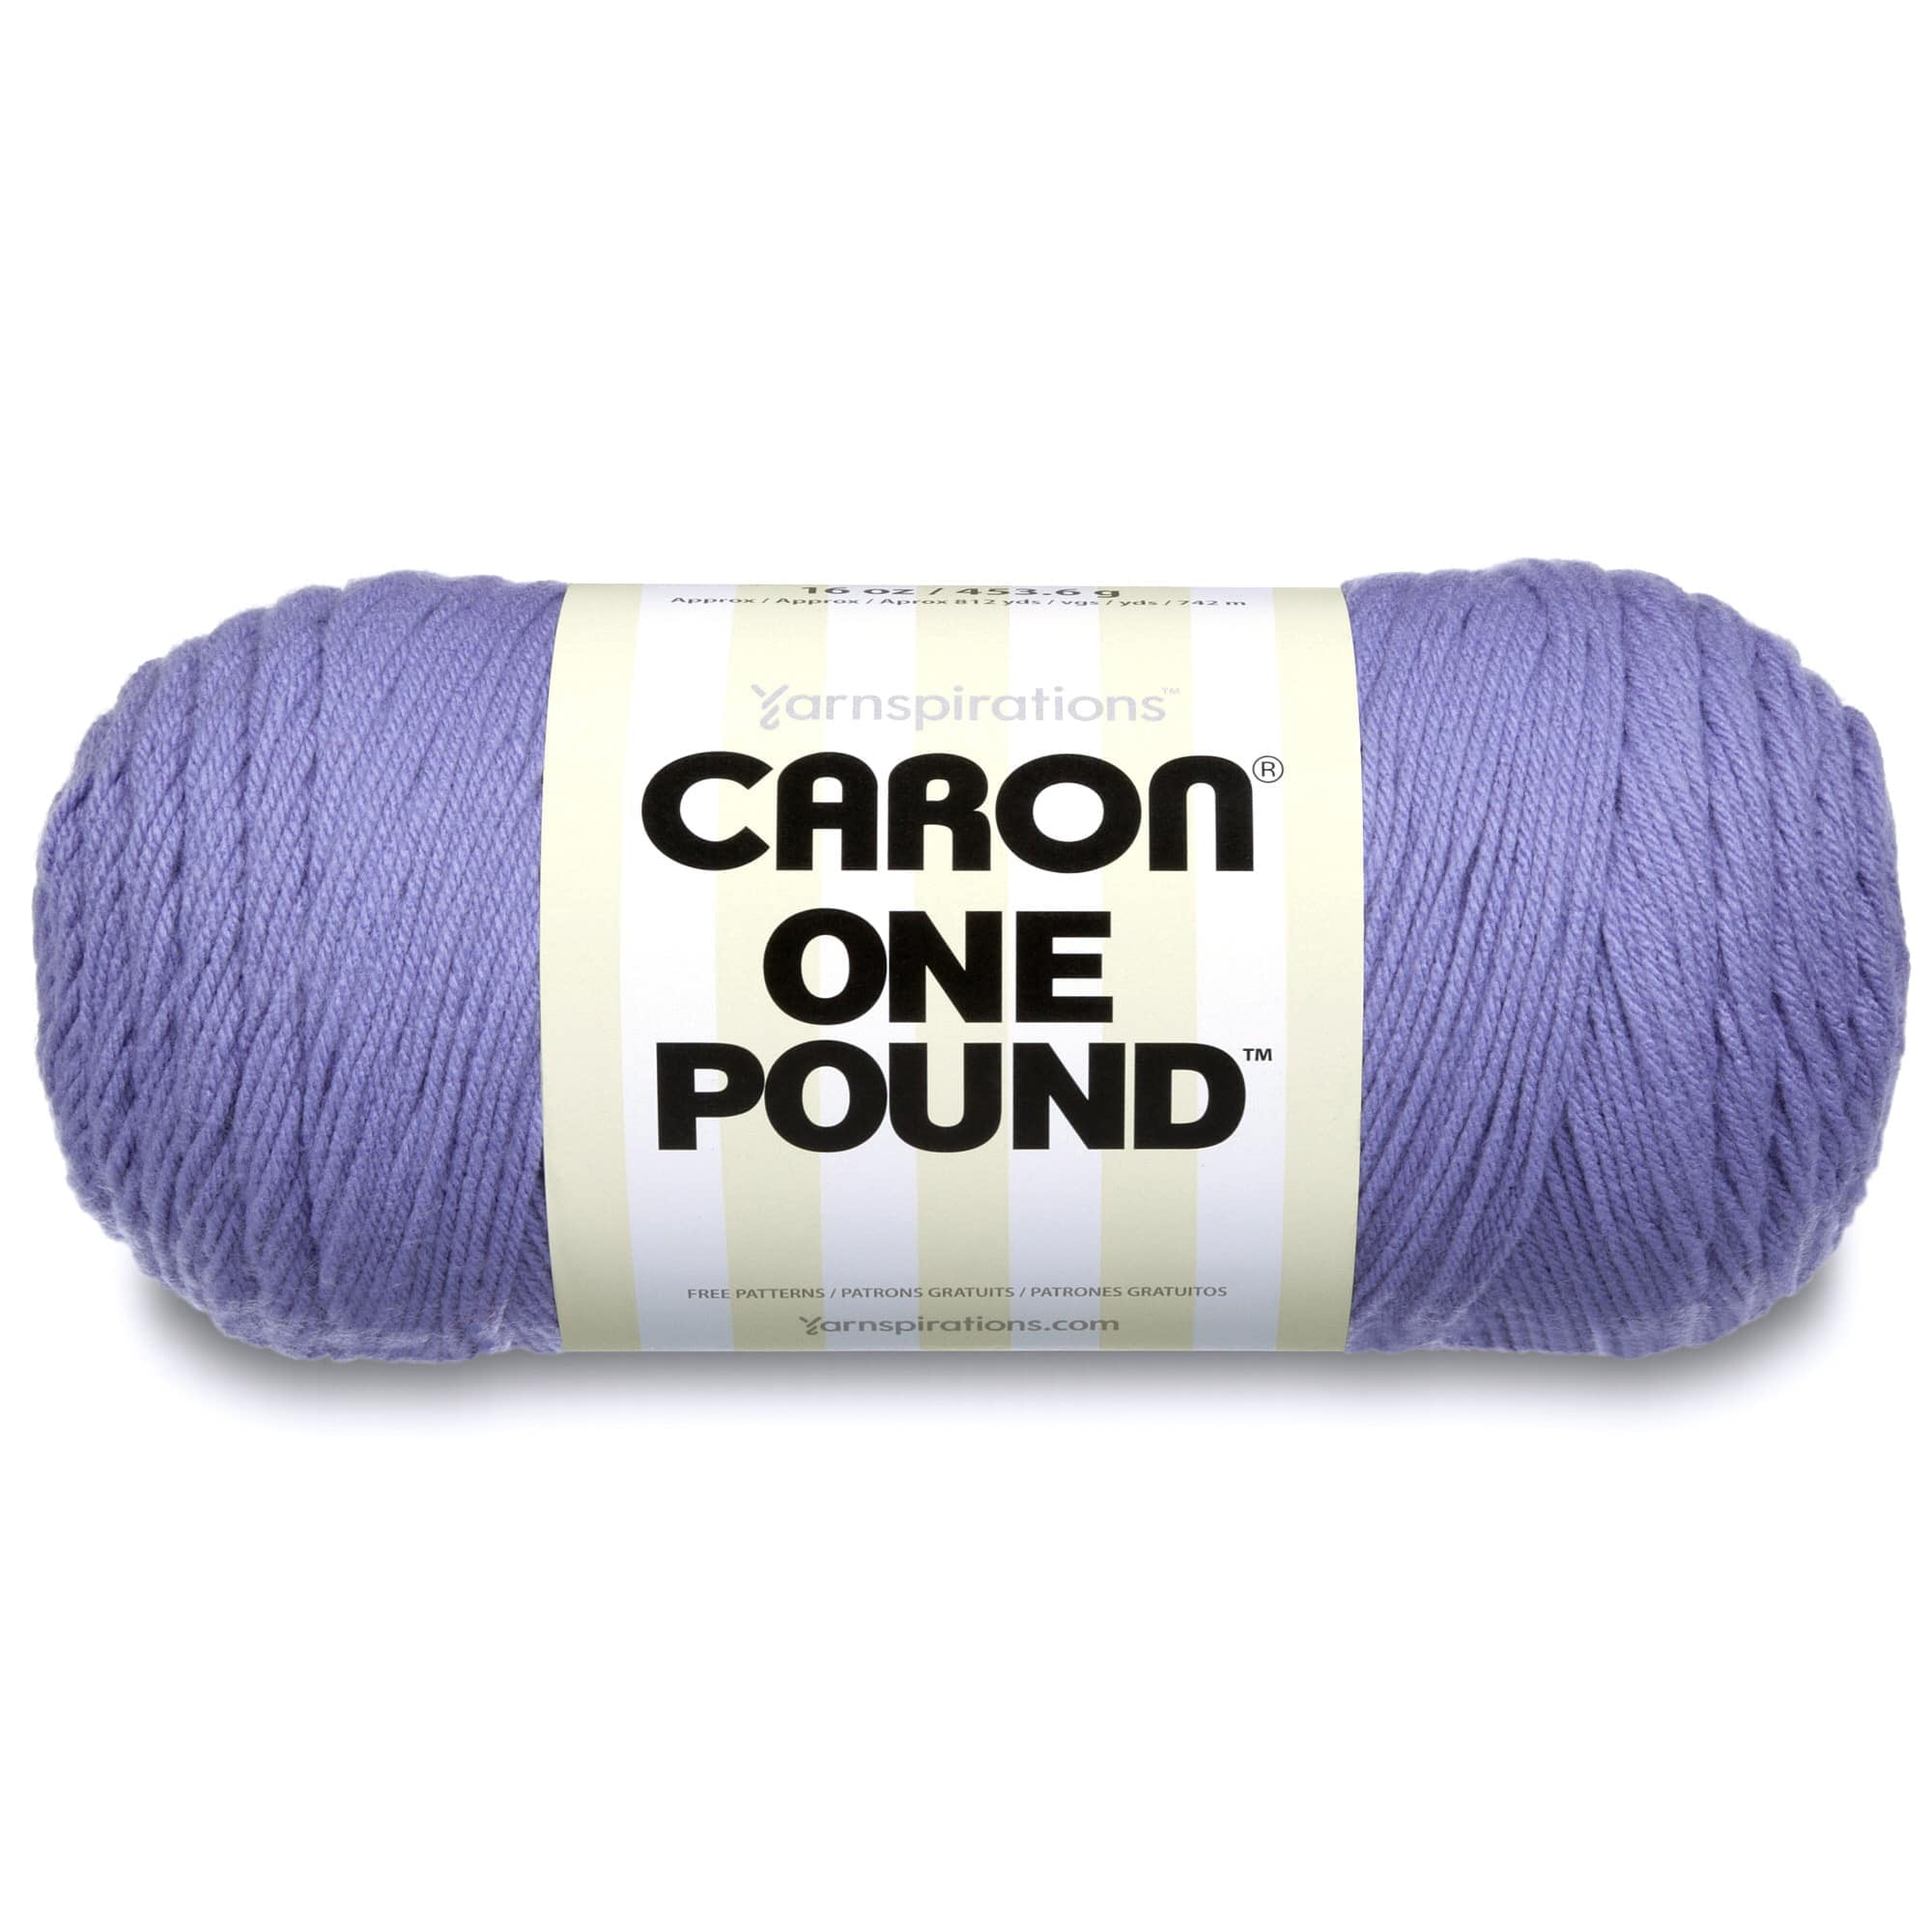 Caron One Pound Solids Yarn, 16oz, Gauge 4 Medium, 100% Acrylic - Lilac-  For Crochet, Knitting & Crafting ( 1 Piece )